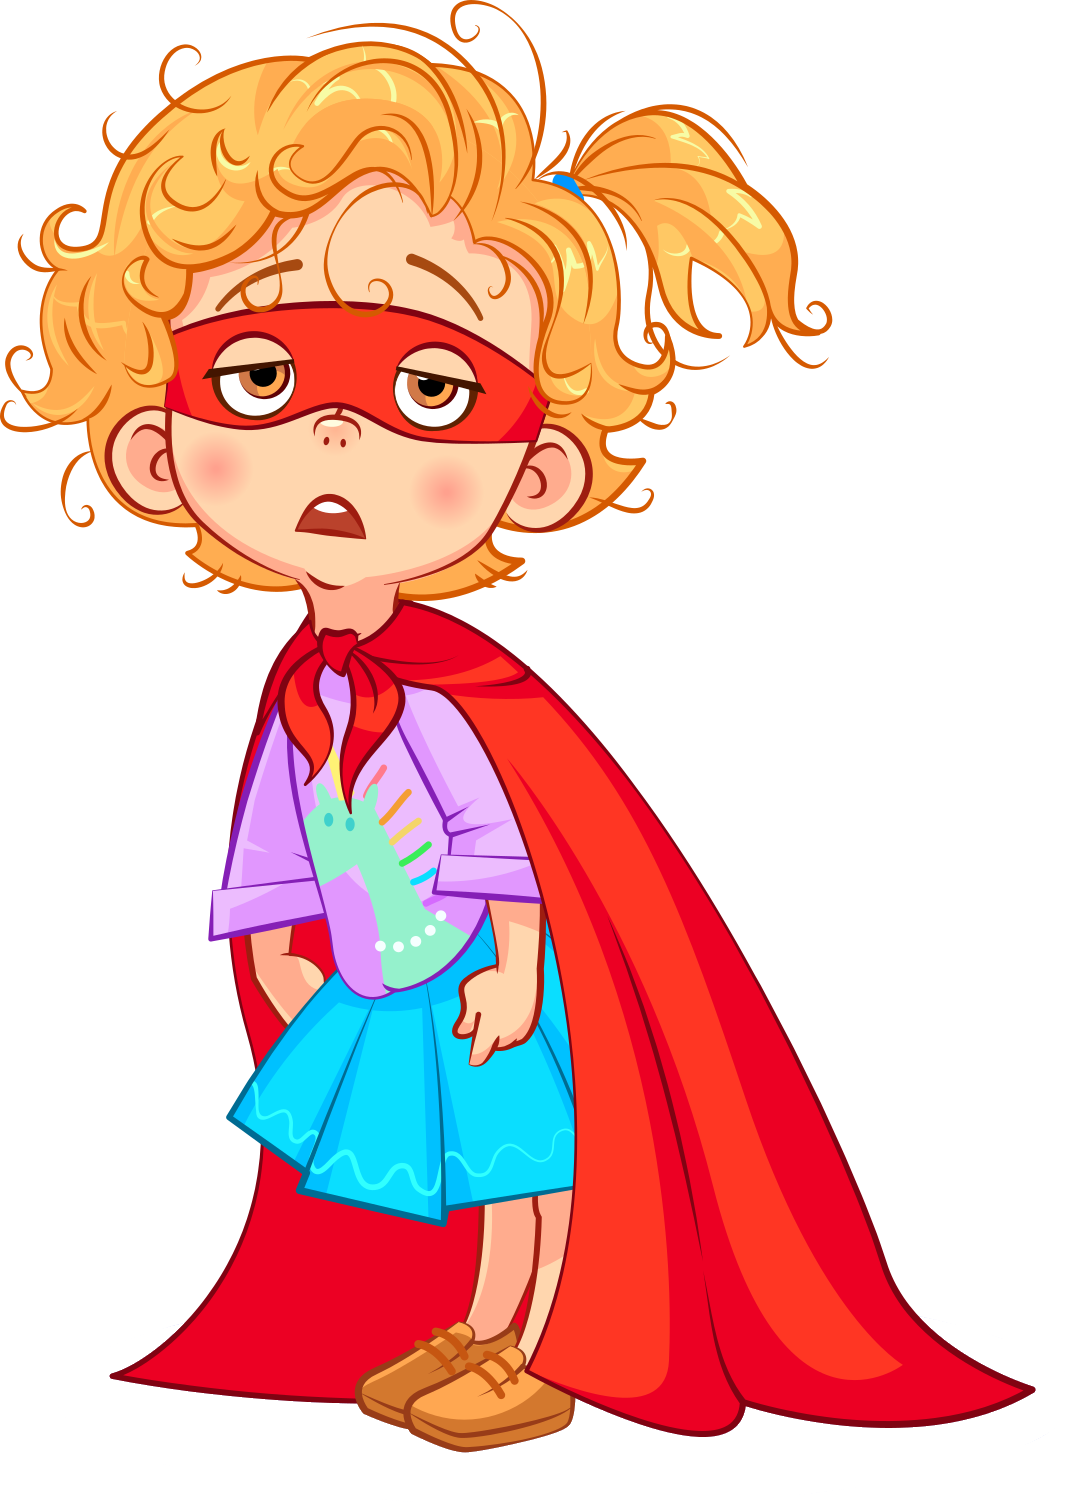 Illustration of a sleepy child in a superhero costume